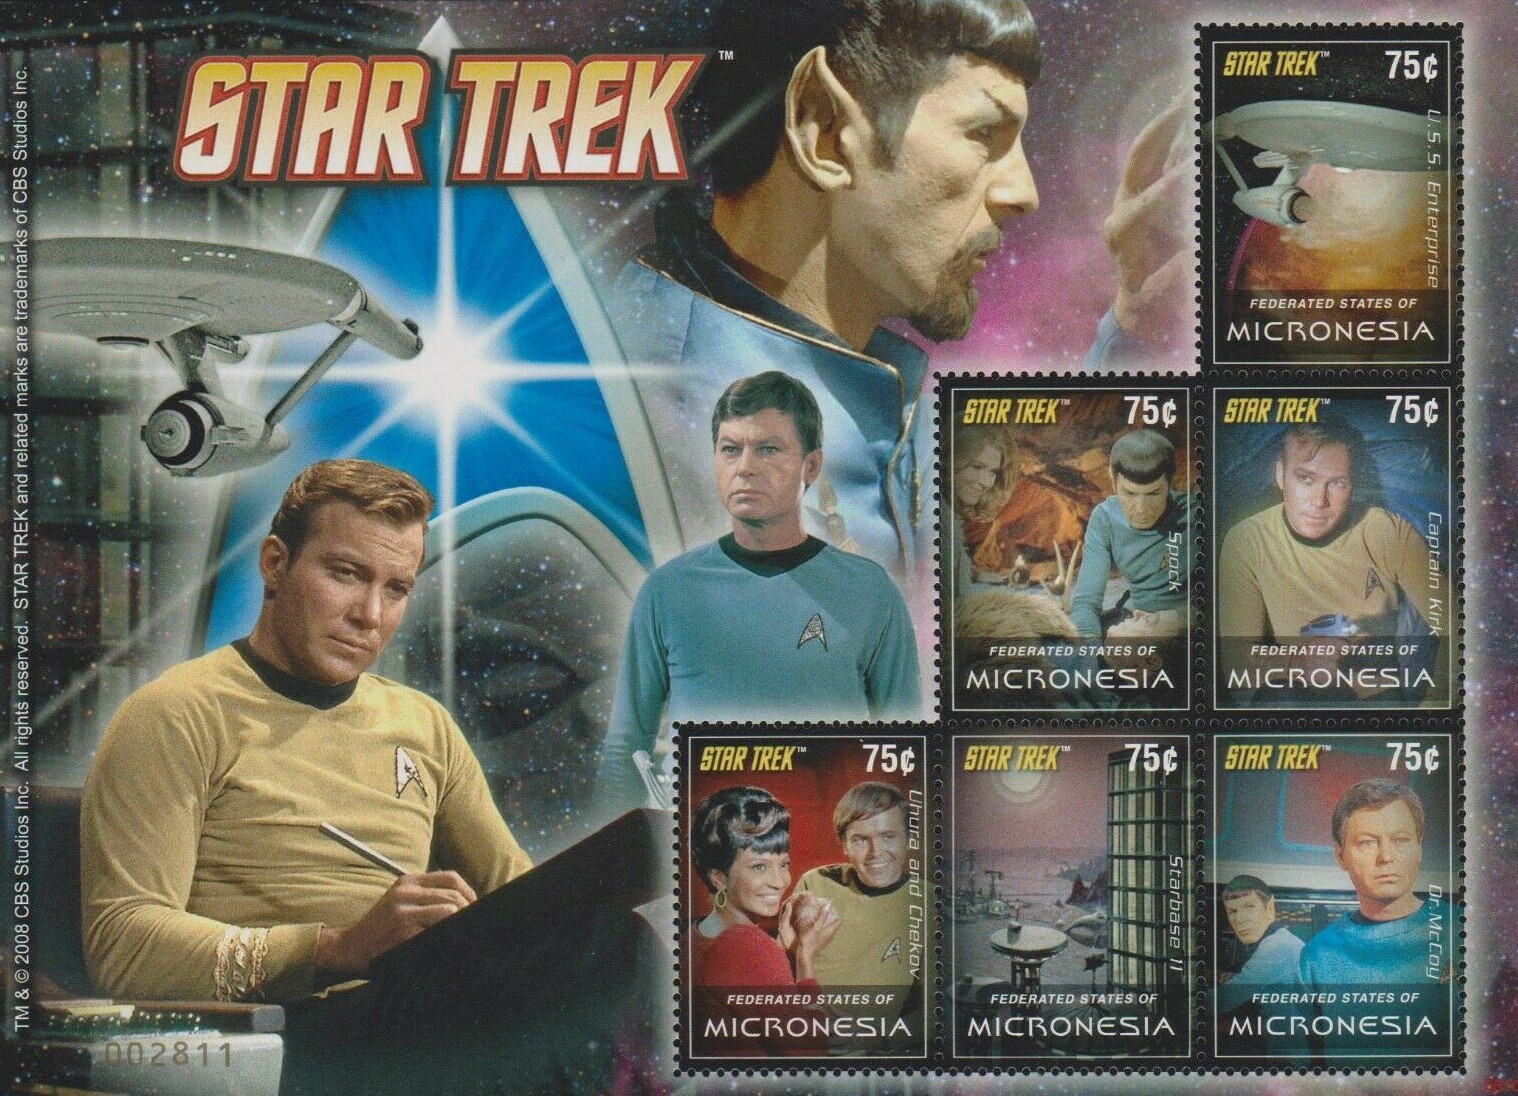 Star Trek Postal Stamps And Souvenir Sheets 02